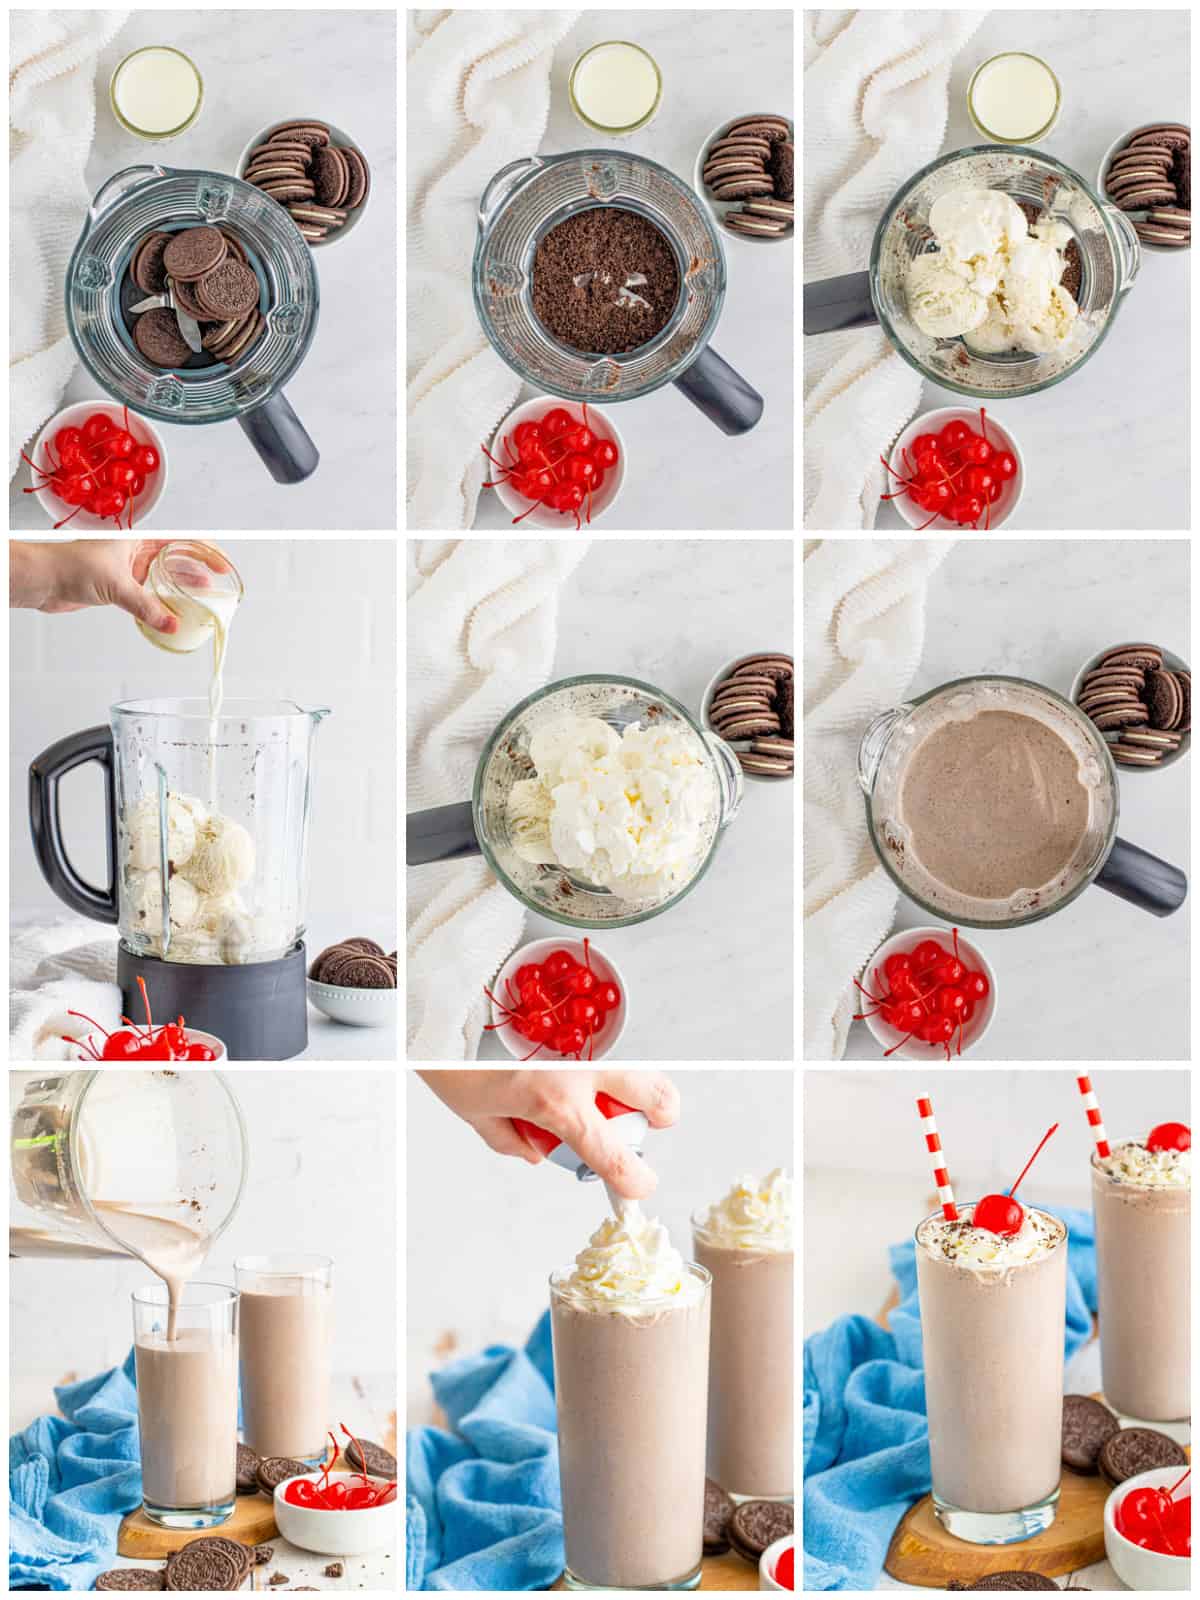 Step by step photos on how to make an Oreo Milkshake